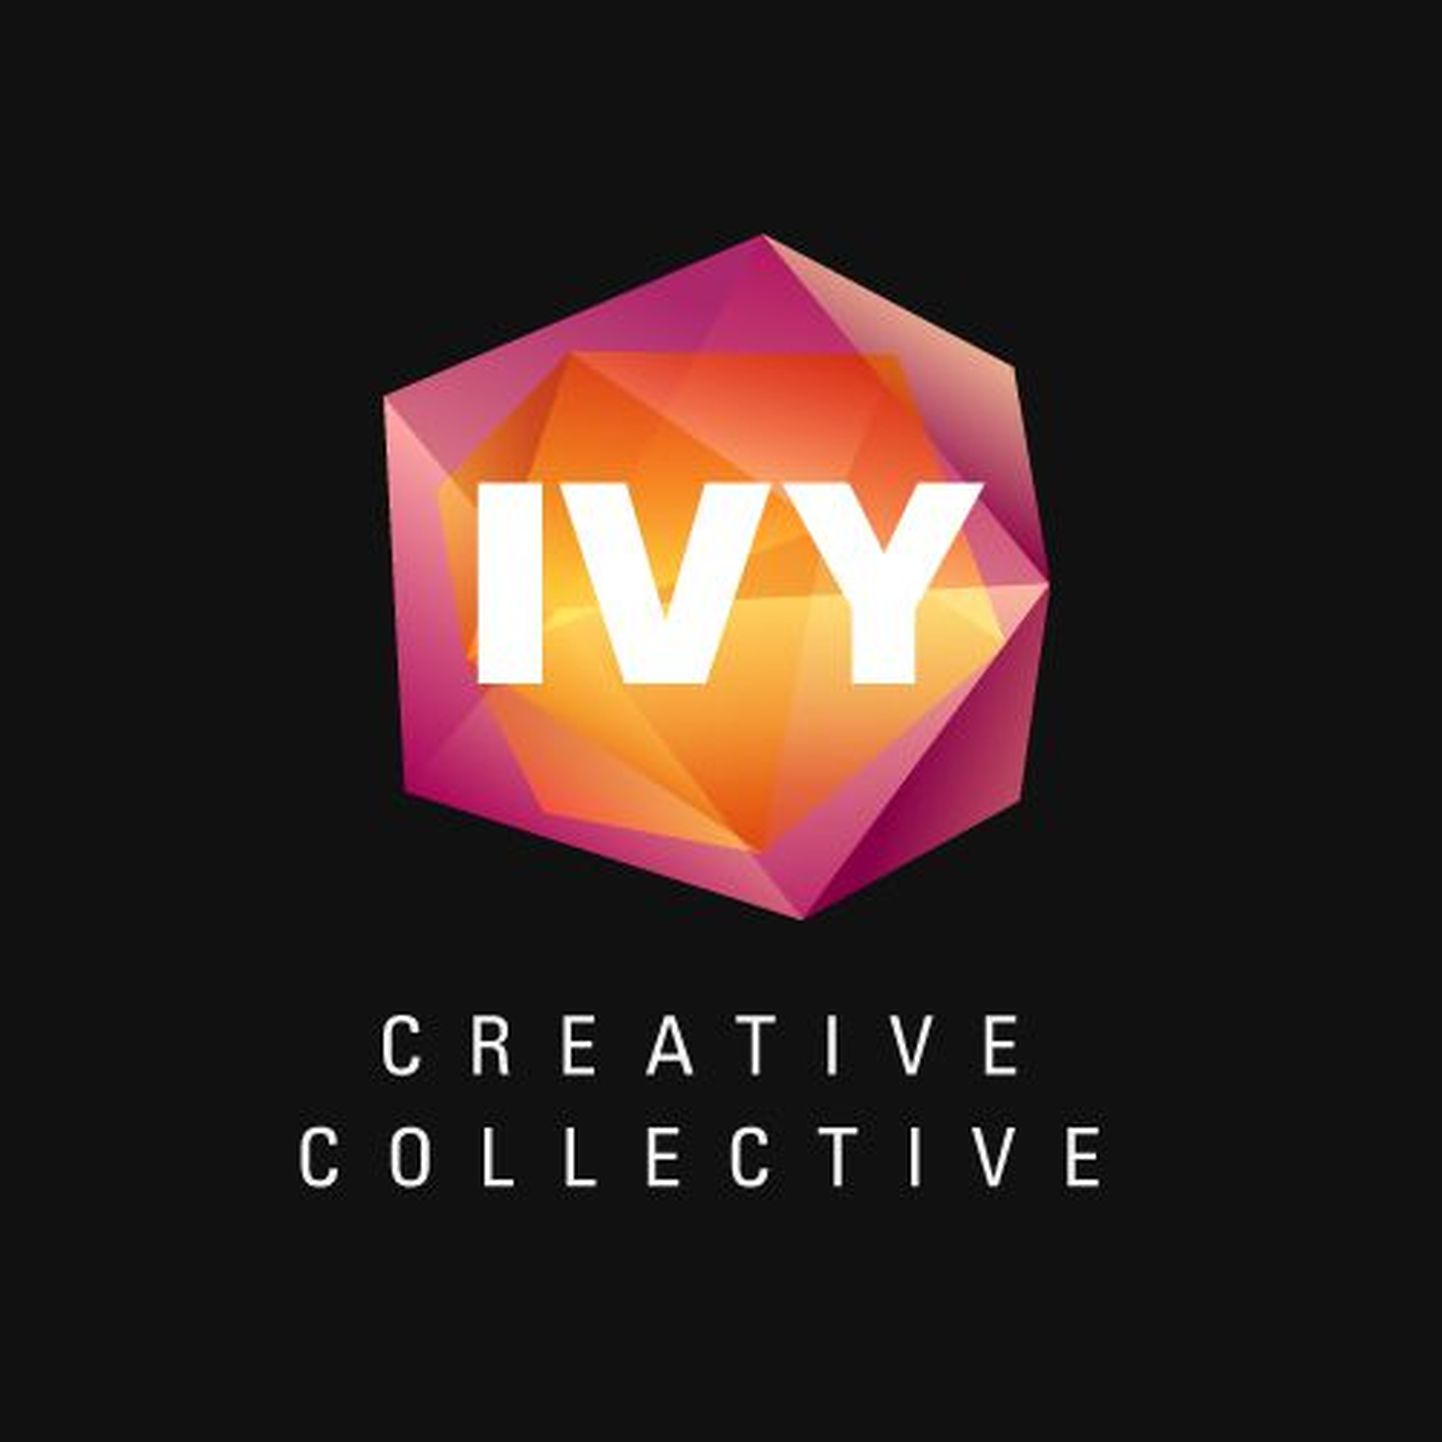 IVY Creative Collective'i logo.